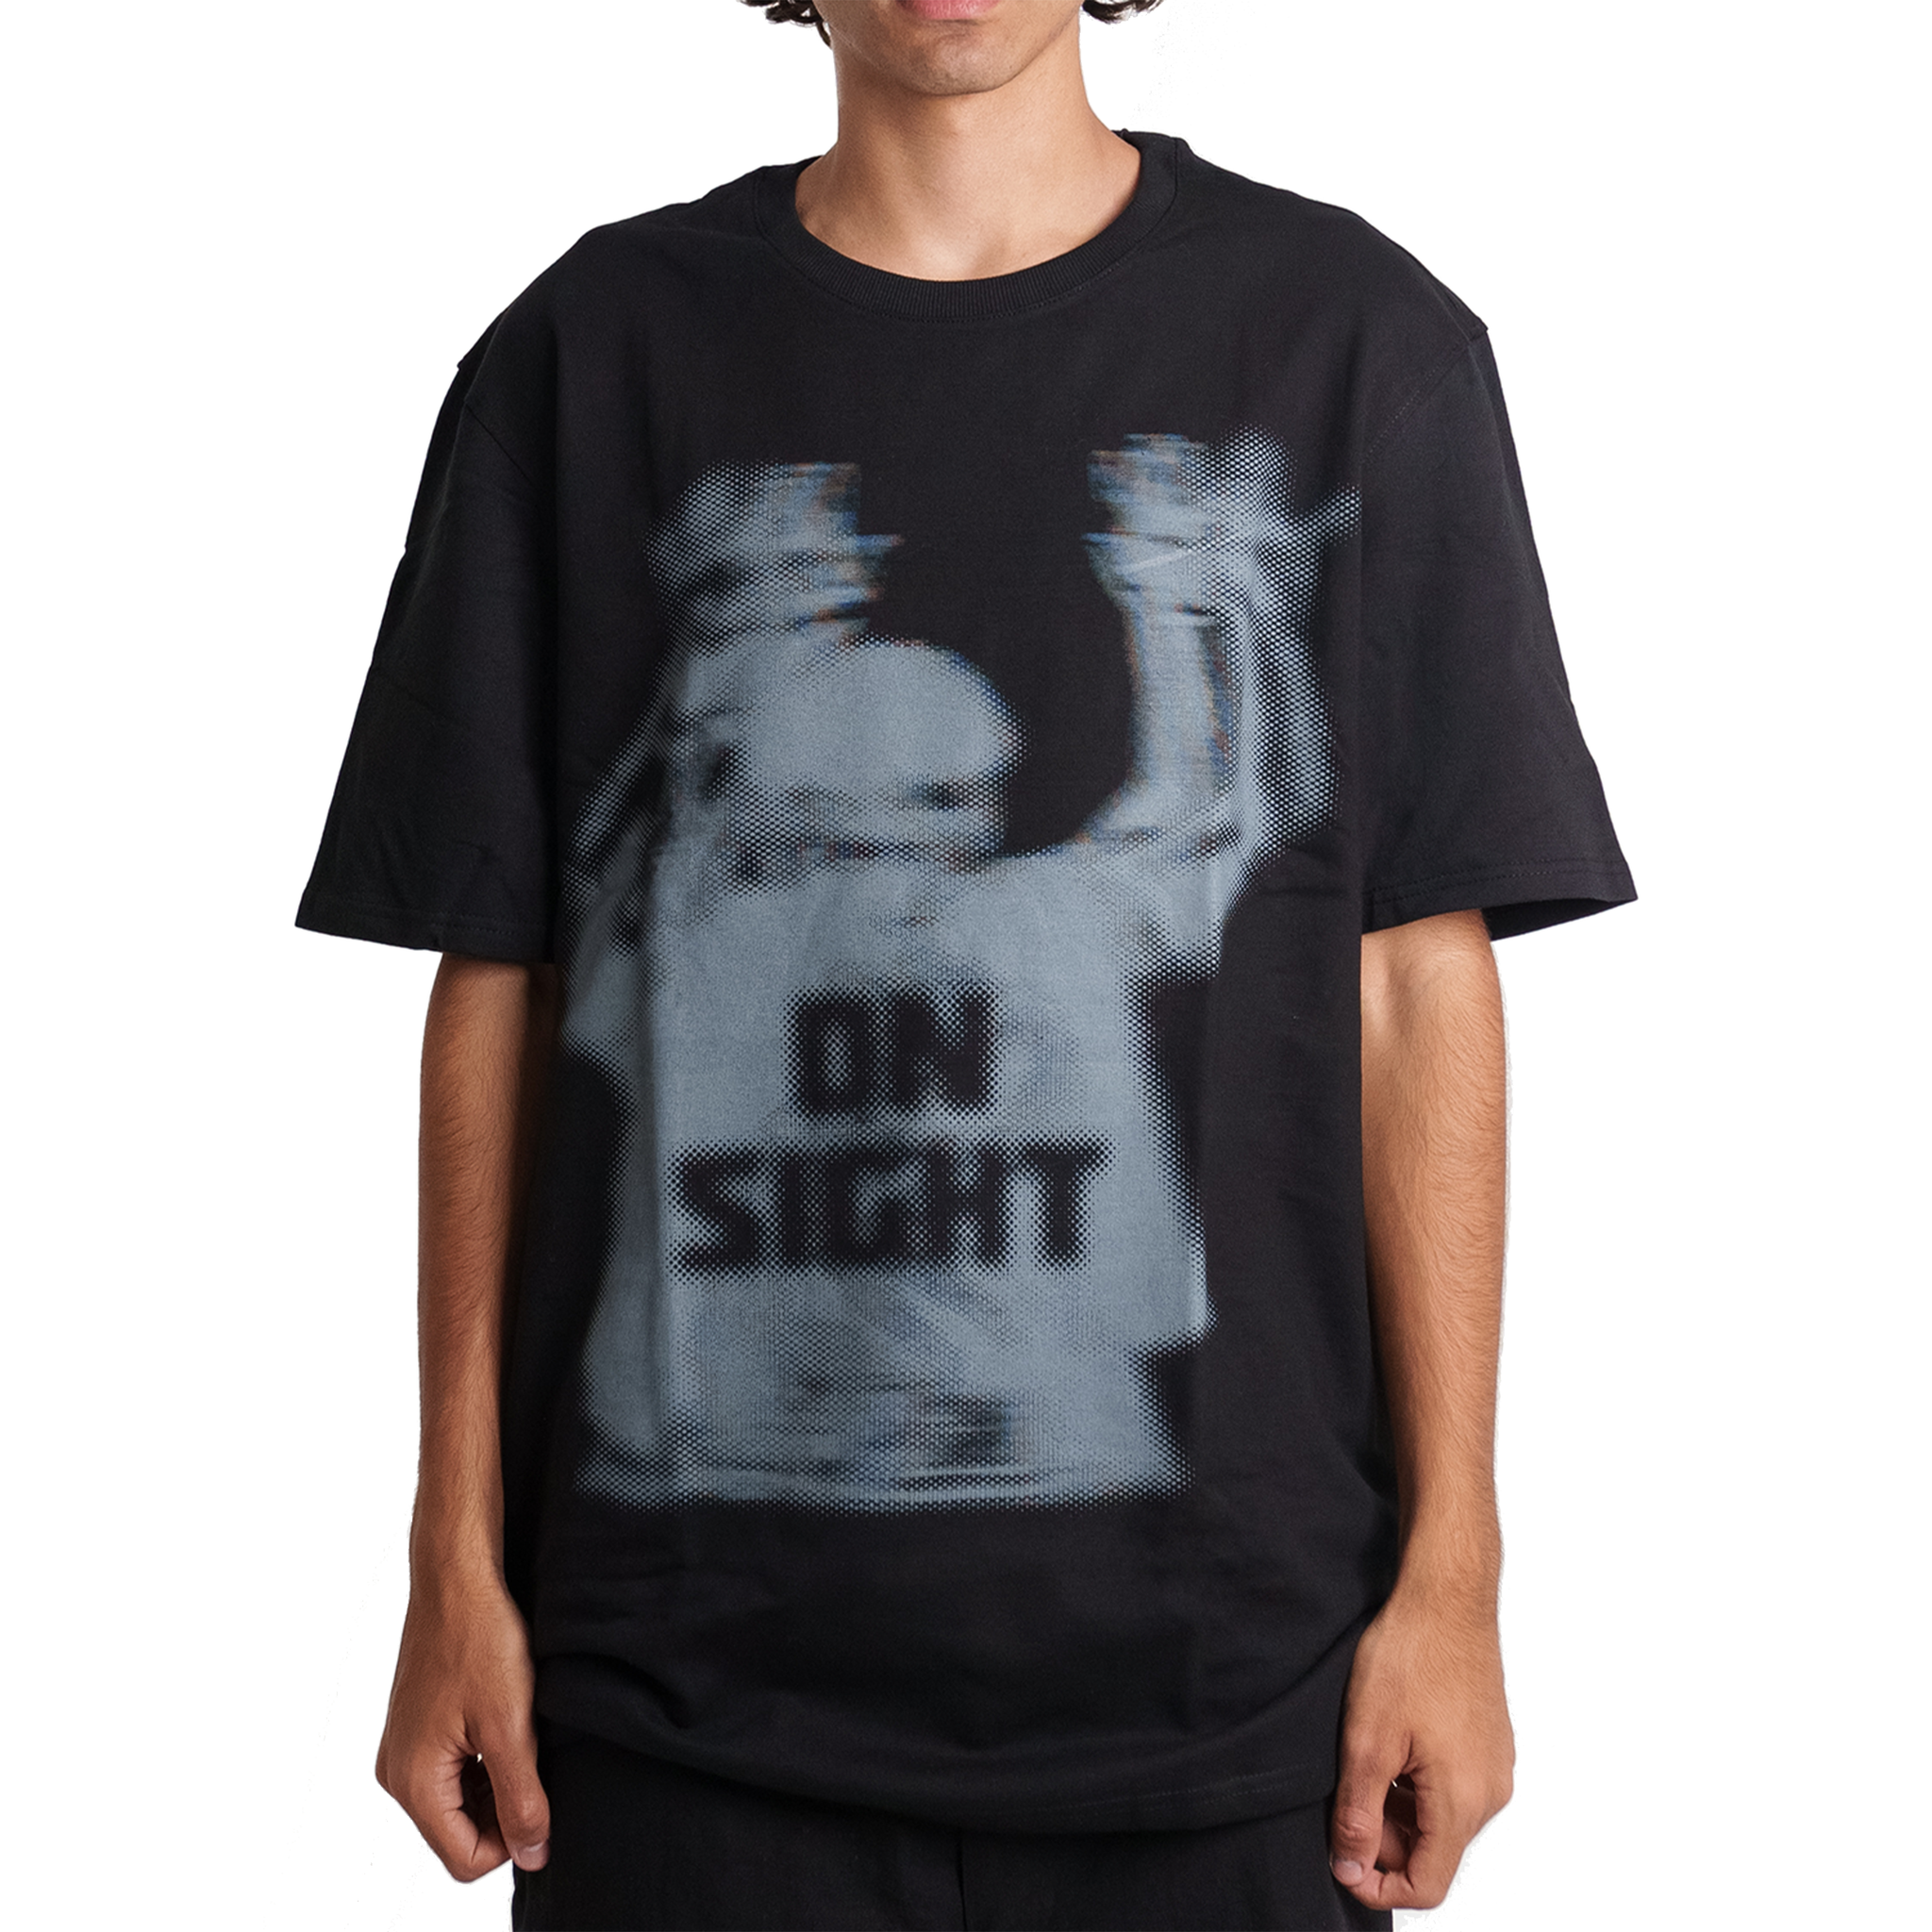 "On SIGHT" T-Shirt